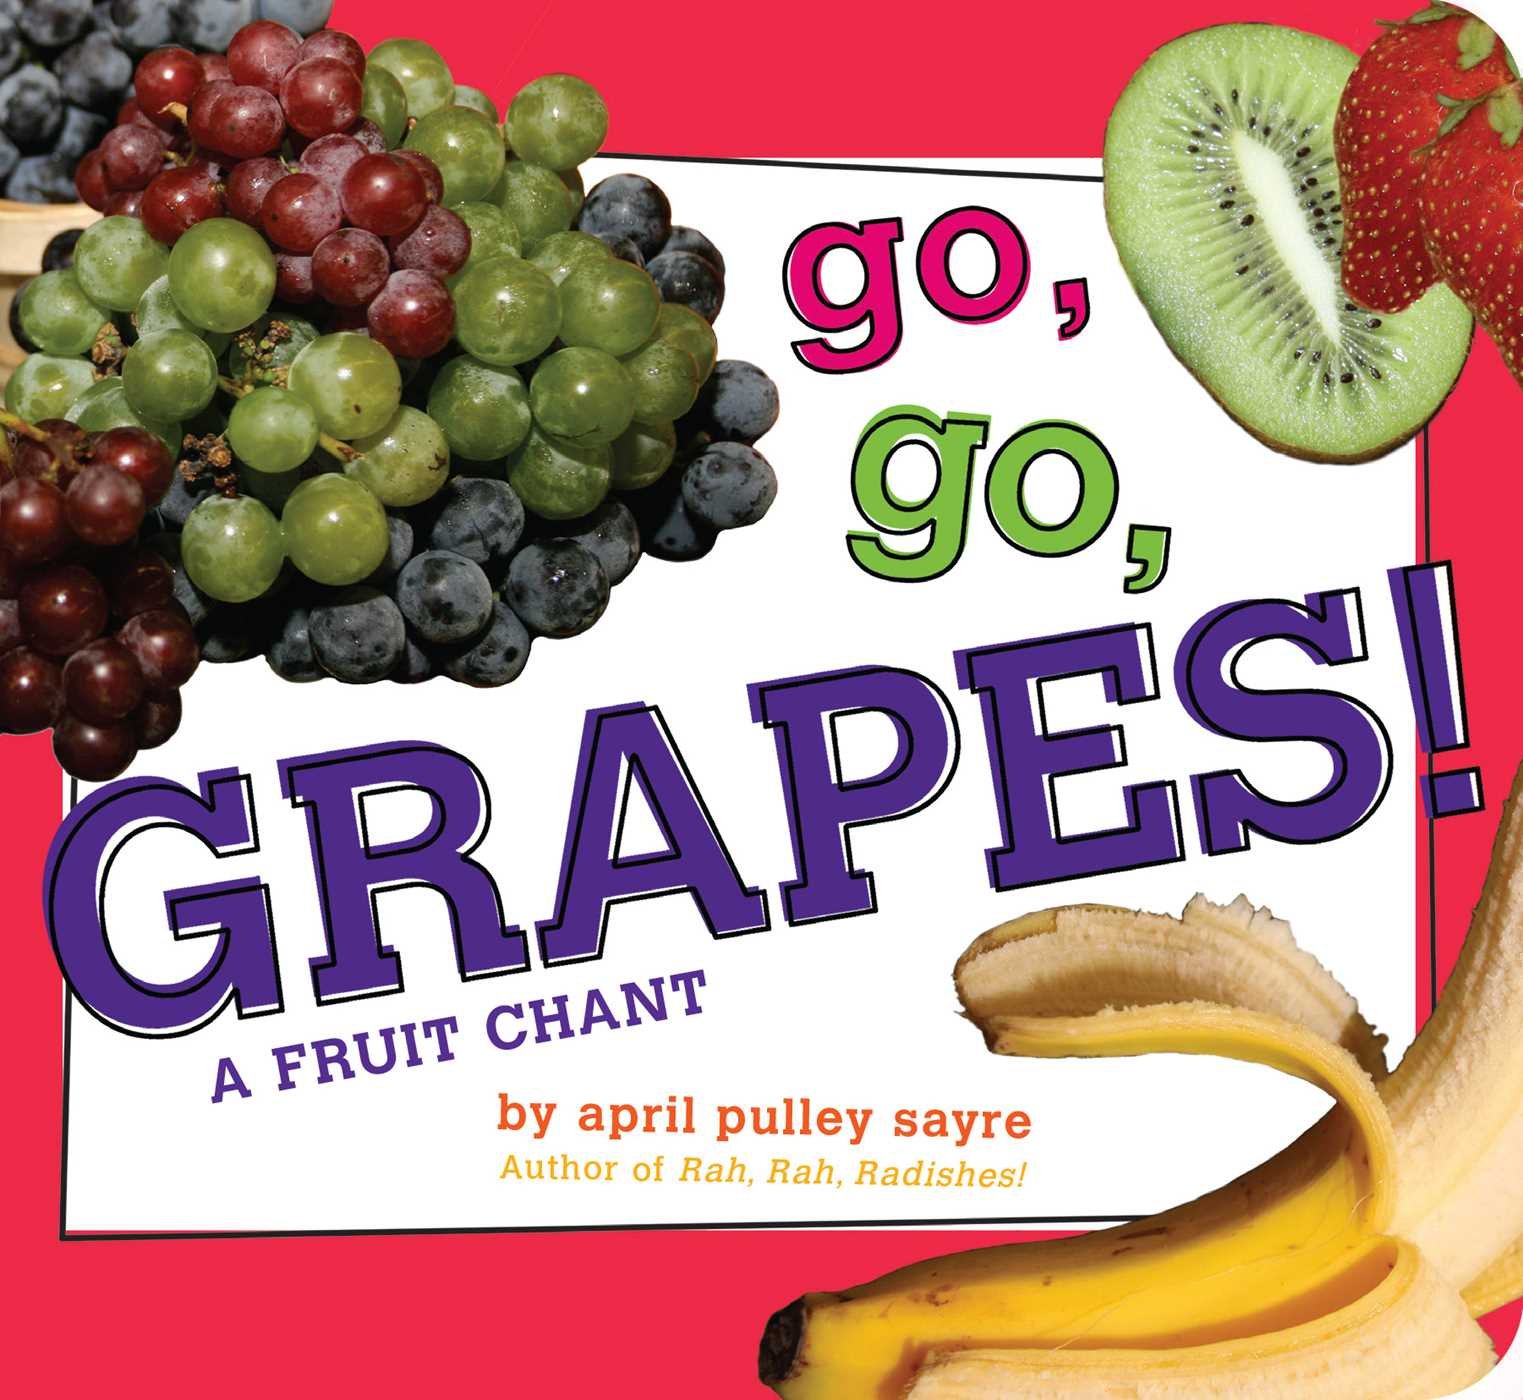 Amazon.com: Go, Go, Grapes!: A Fruit Chant (Classic Board Books ...